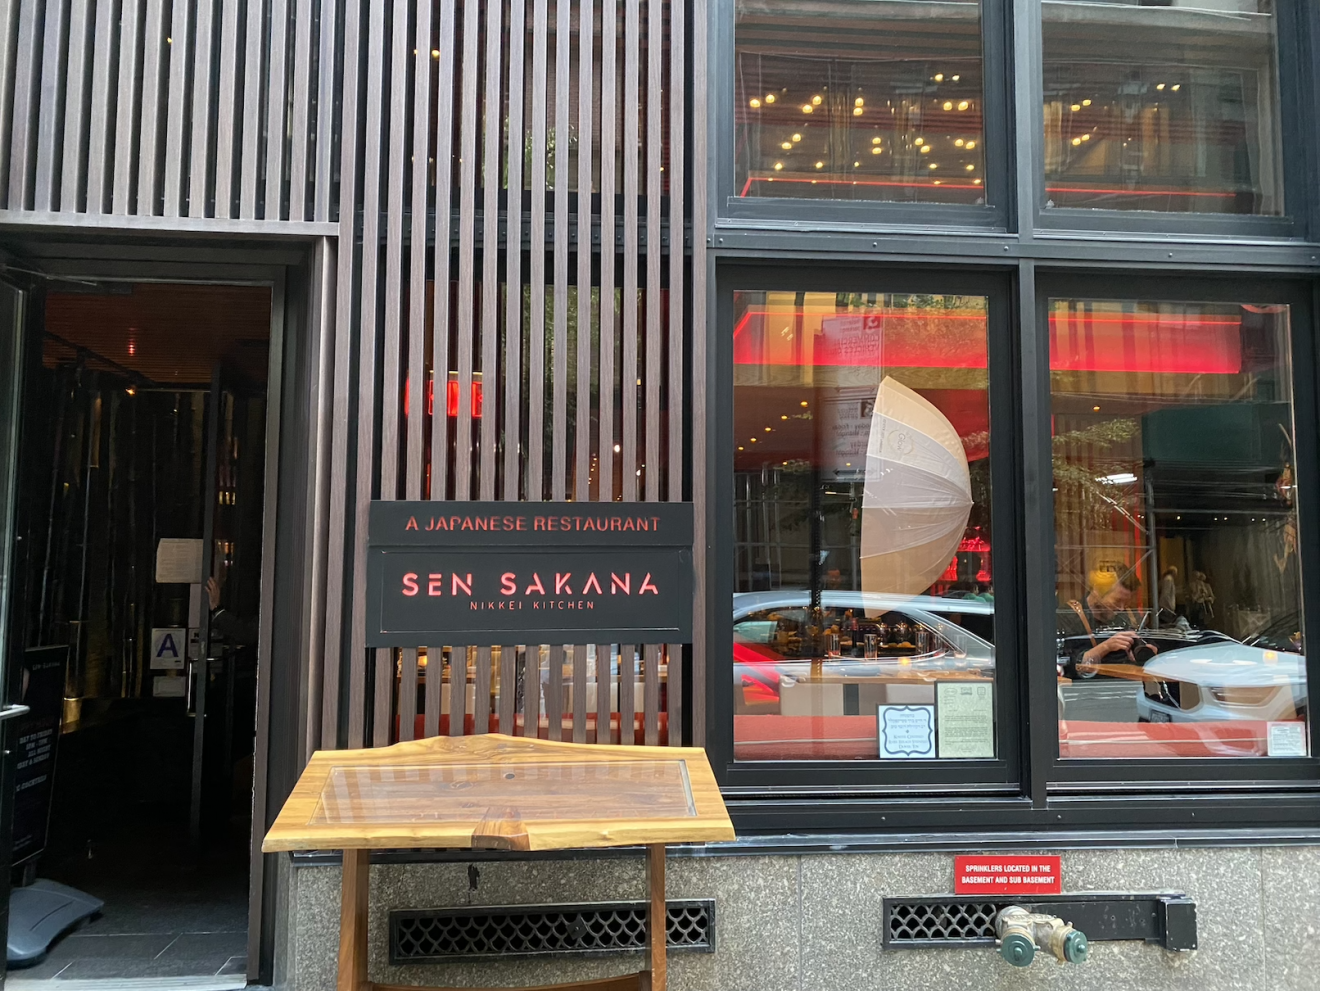 [Brand New] Nikkei Cuisine Kosher Restaurant in Midtown Manhattan Sen